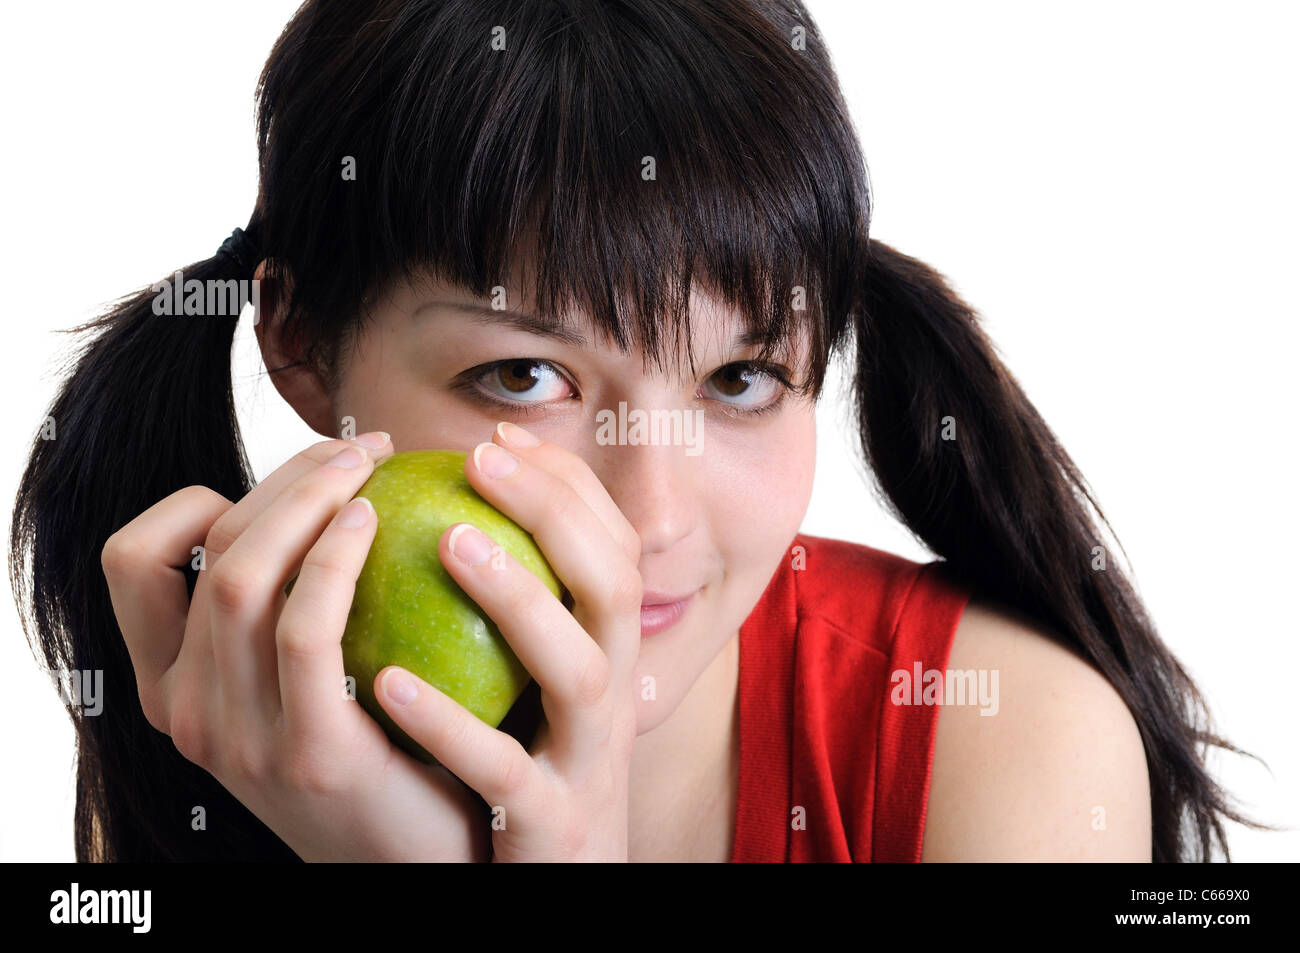 Studioportrait junge attraktive Frau mit grünem Apfel Stockfoto